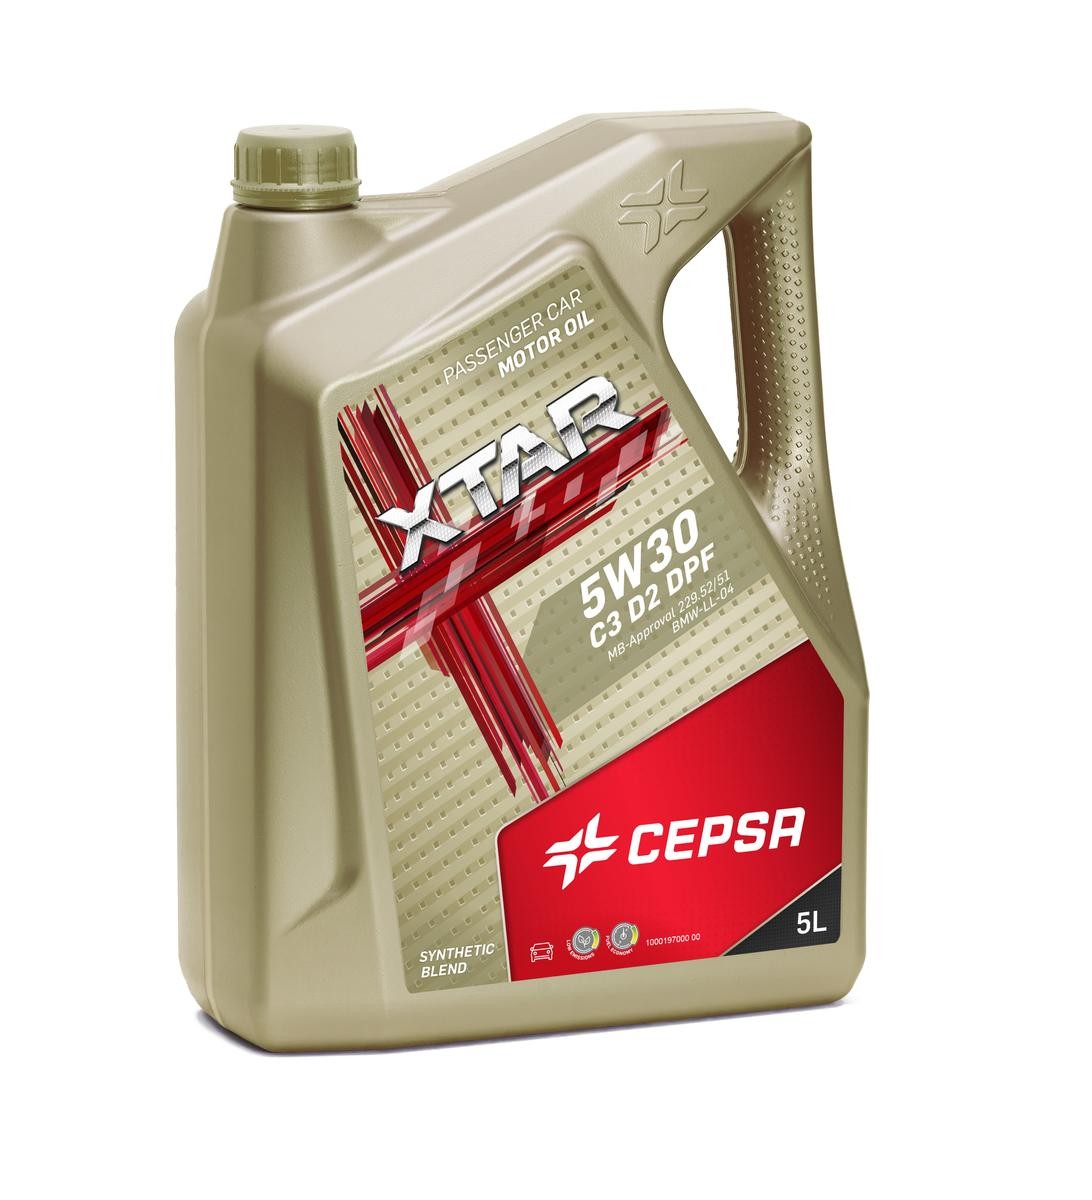 Buy Engine oil CEPSA petrol 513933090 XTAR, C3 D2 DPF 5W-30, 5l, Synthetic, Full Synthetic Oil